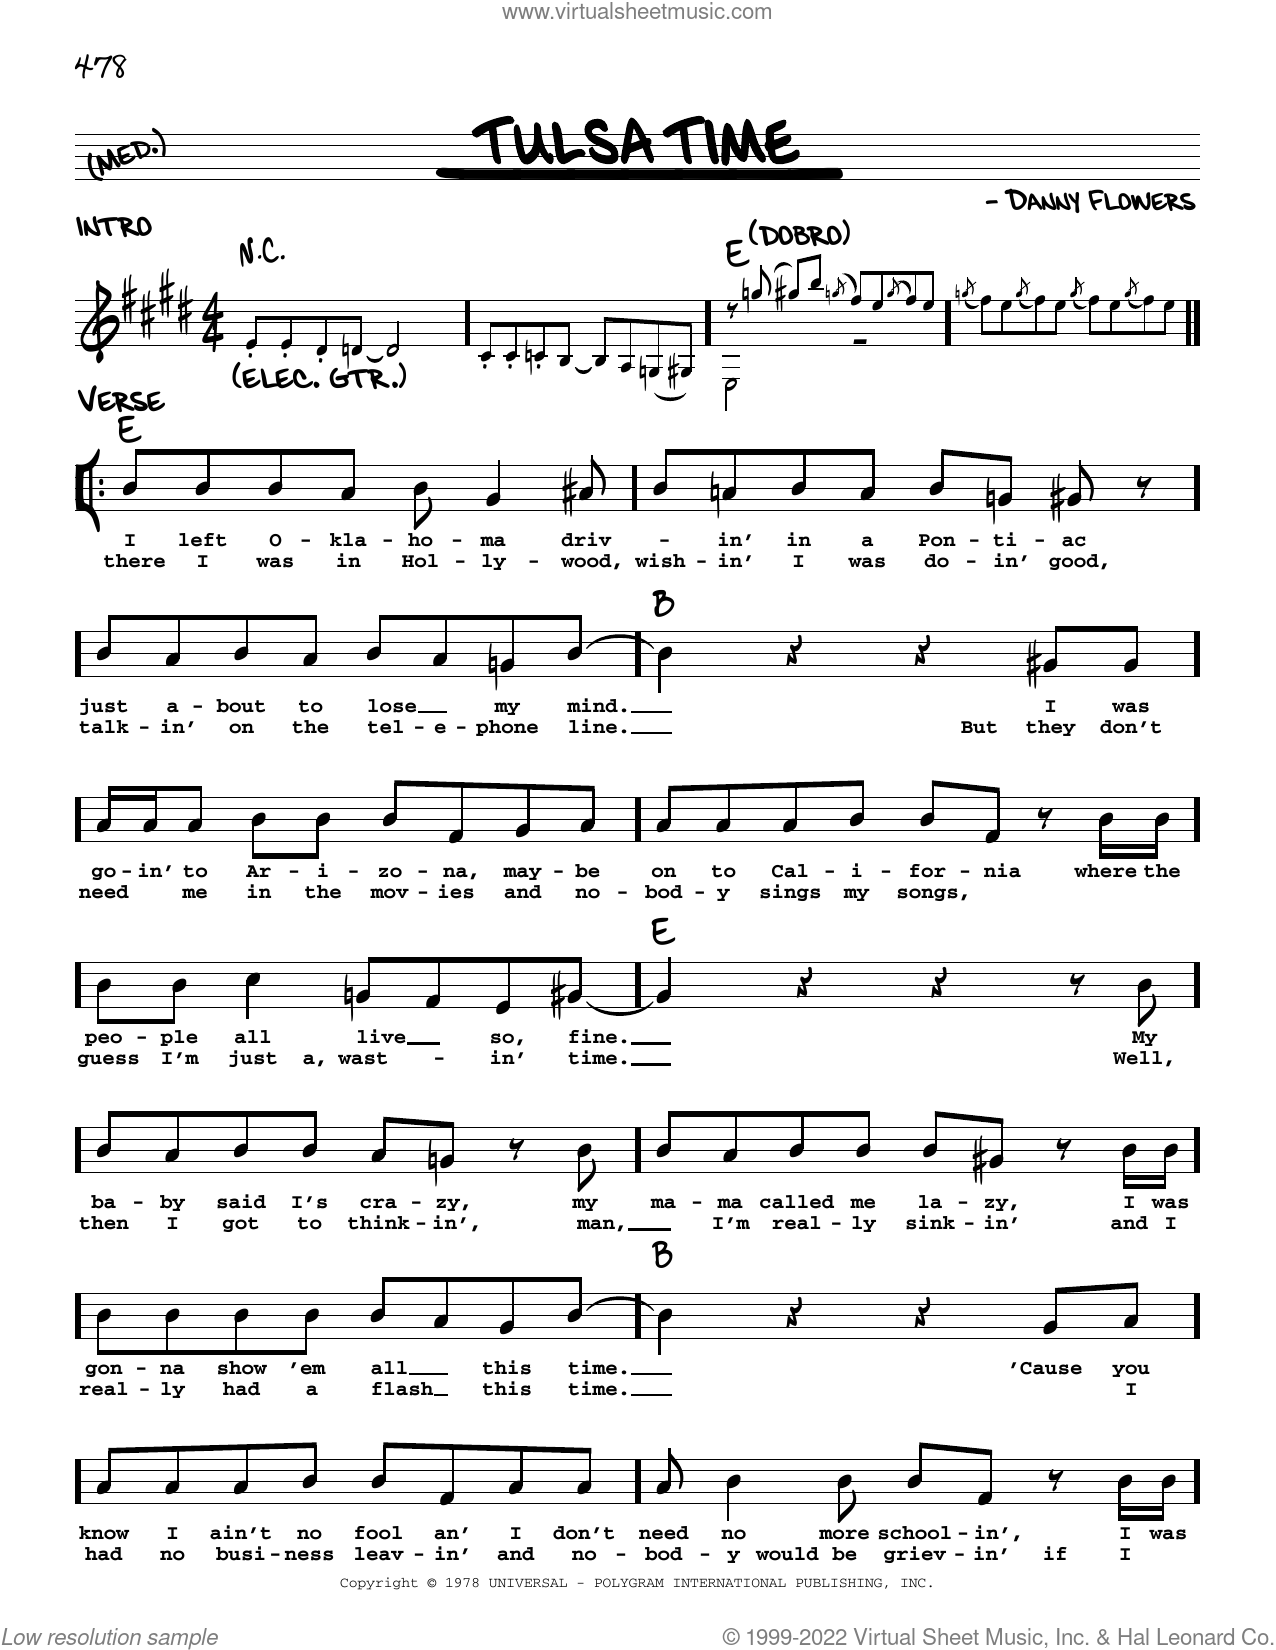 Paper Roses sheet music (real book with lyrics) (PDF)